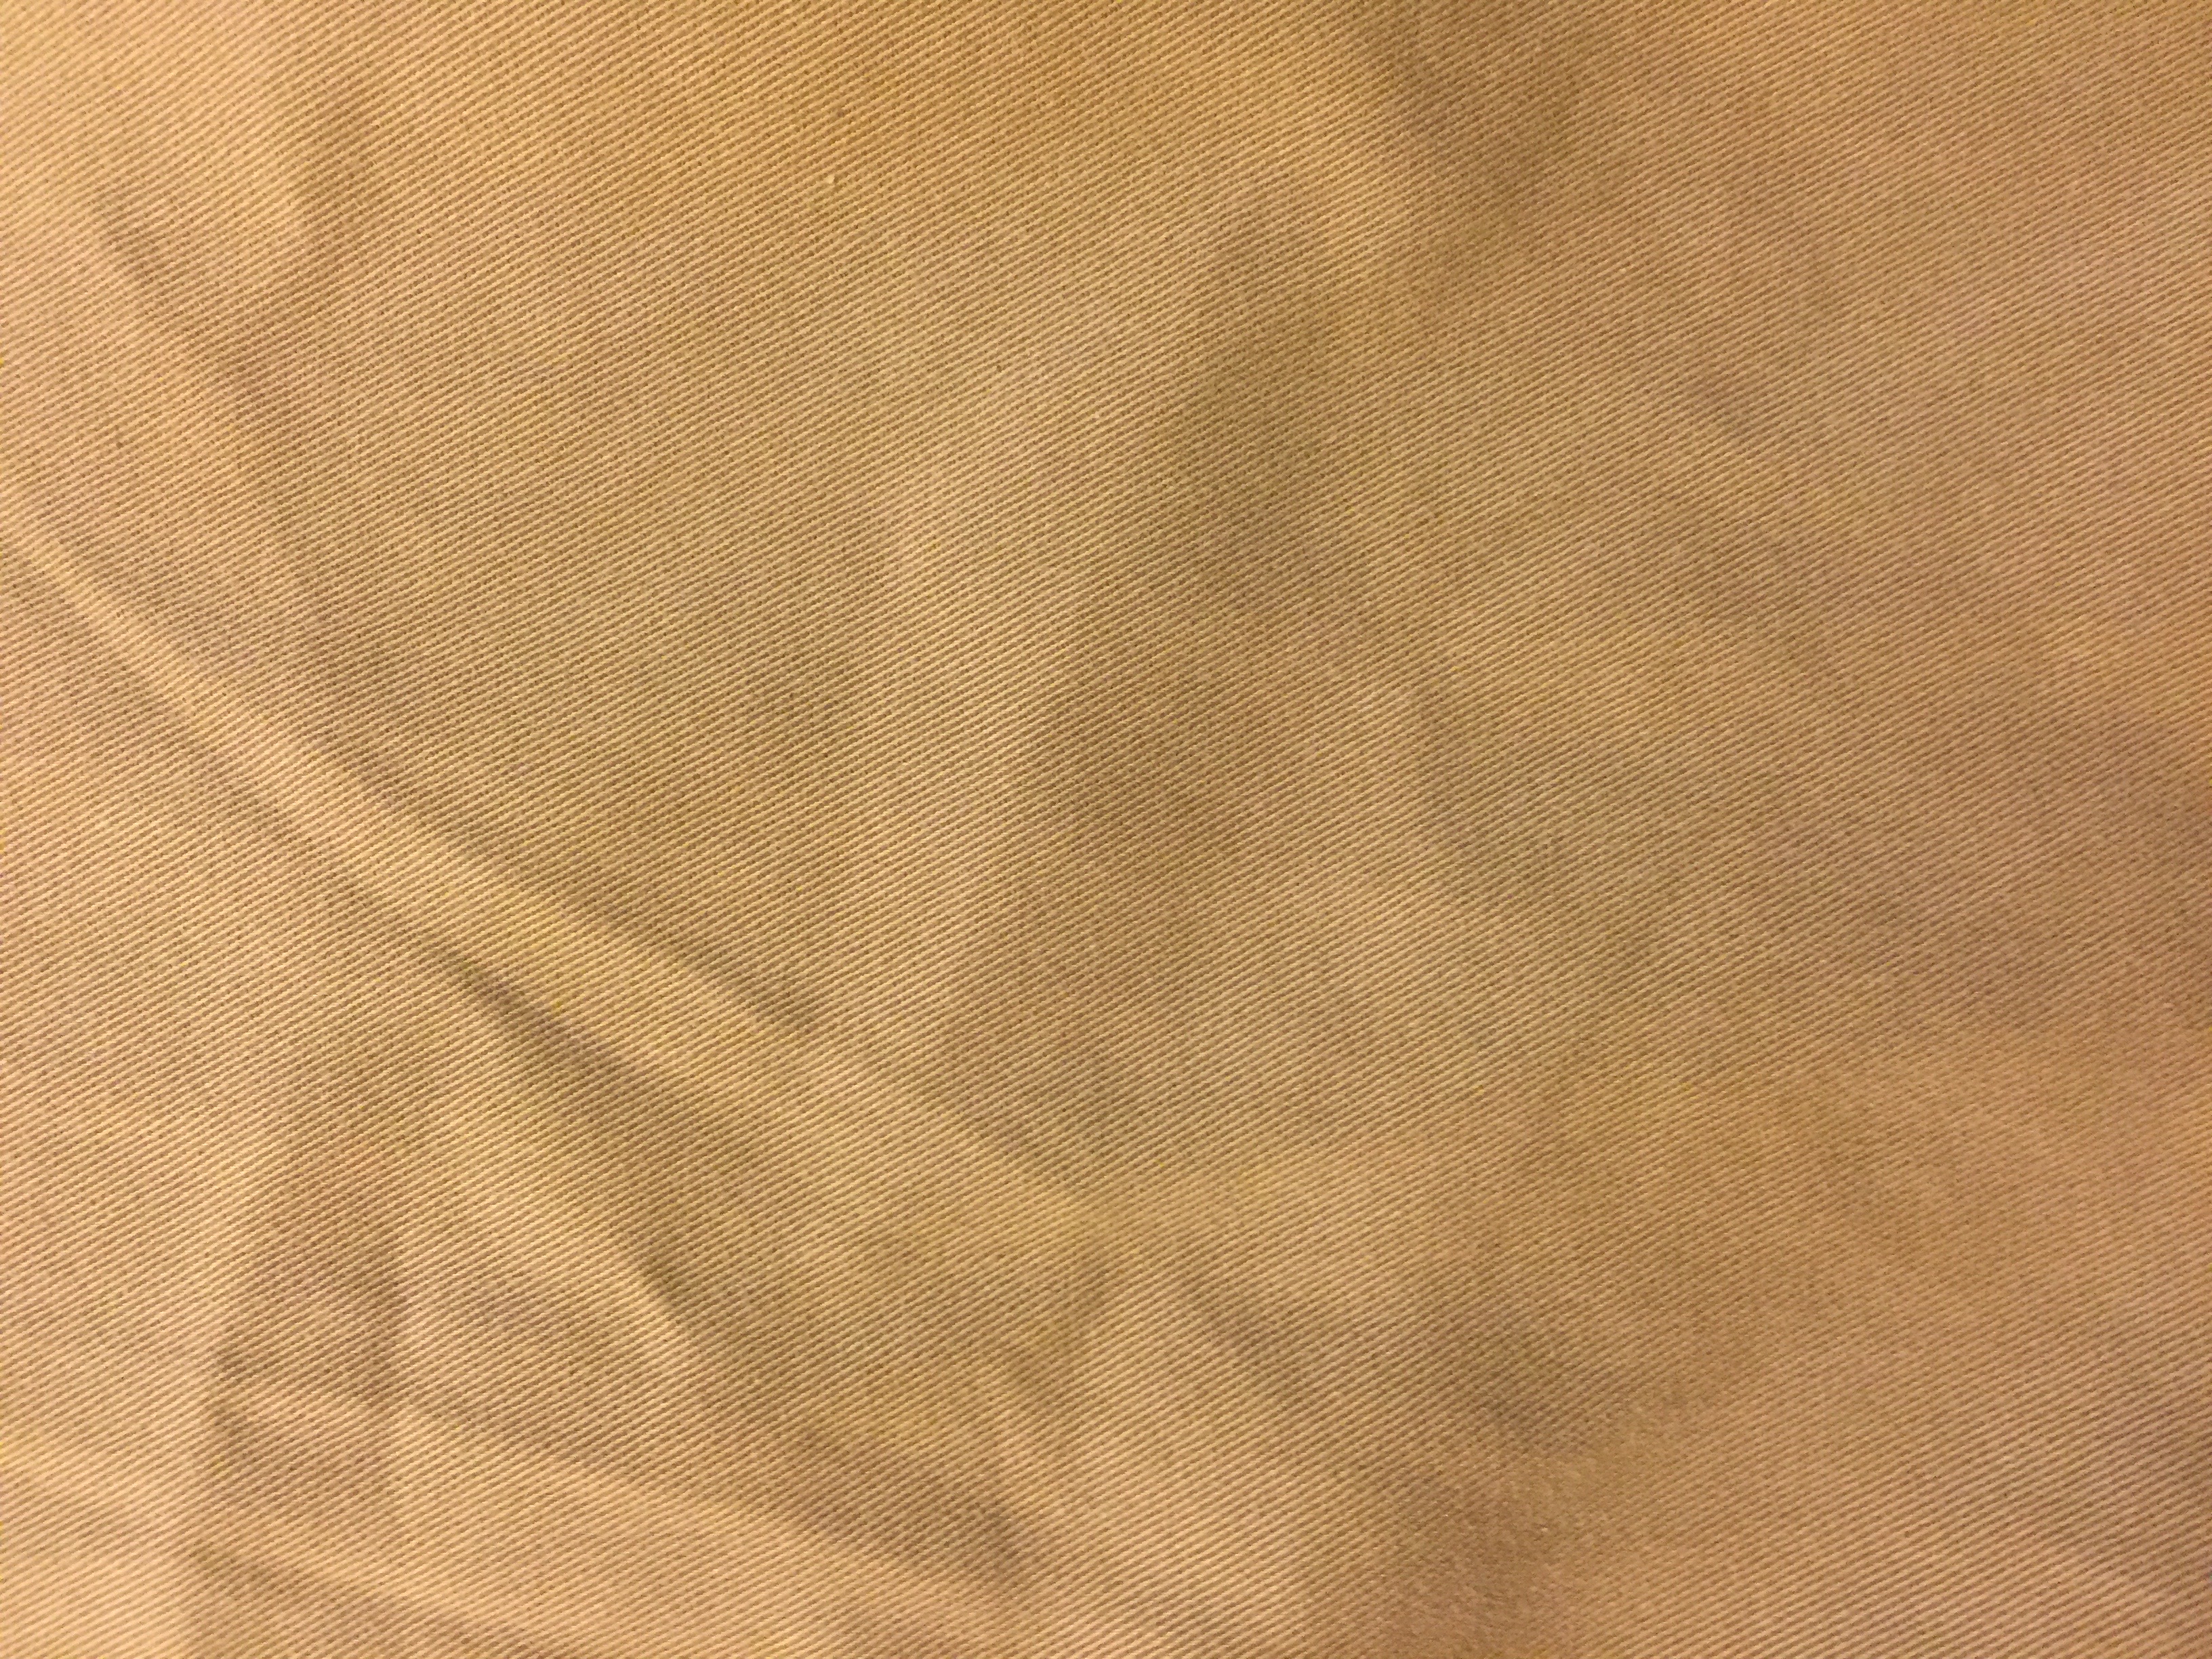 crumpled khaki tan crumpled tan khaki canvas fabric - full frame